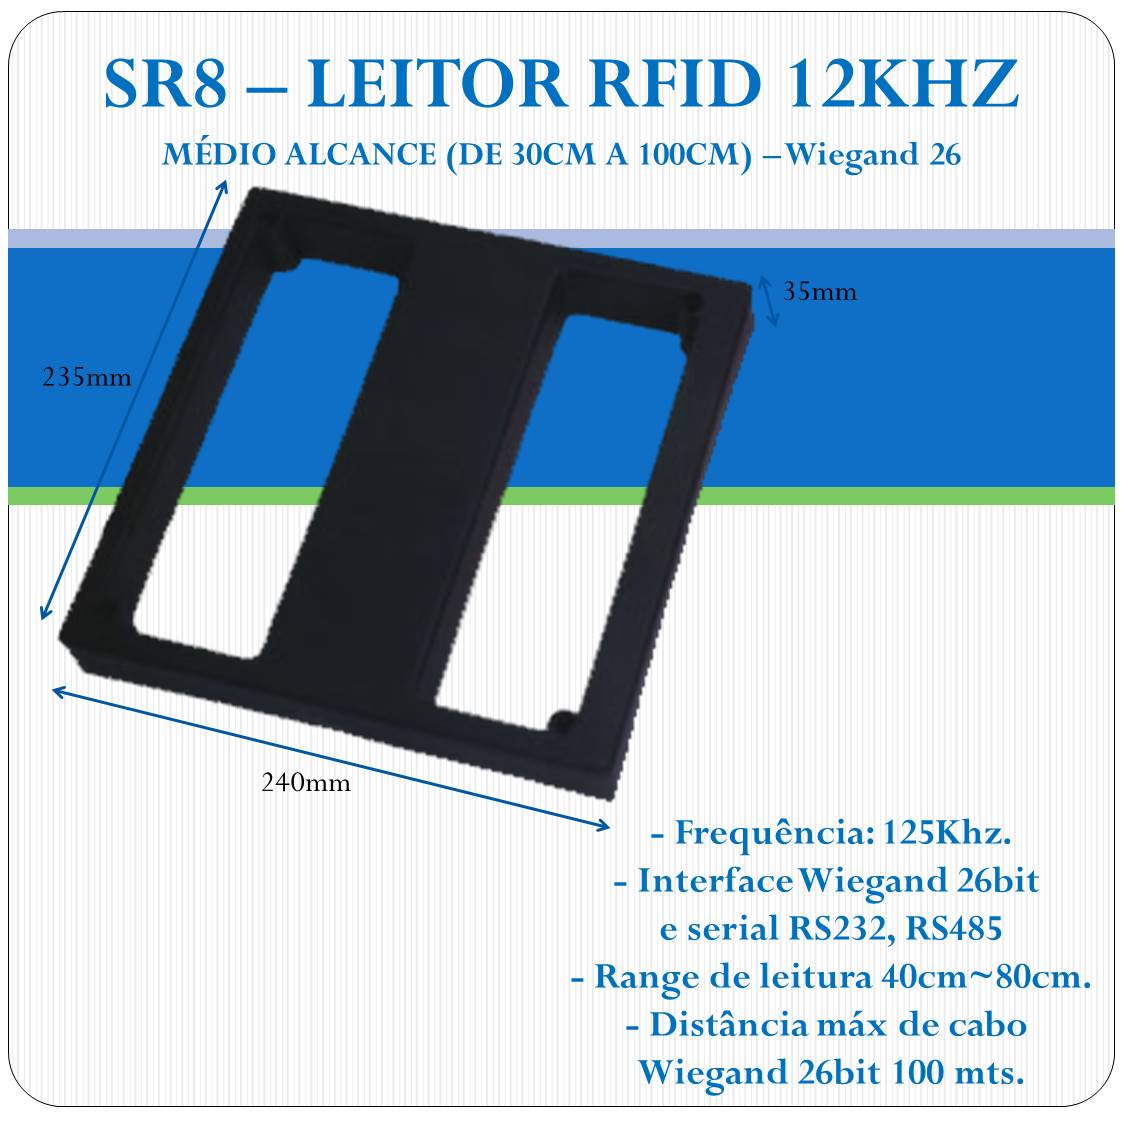 Leitor RFID 125Khz - Médio Alcance - Wiegand 26 - SR8